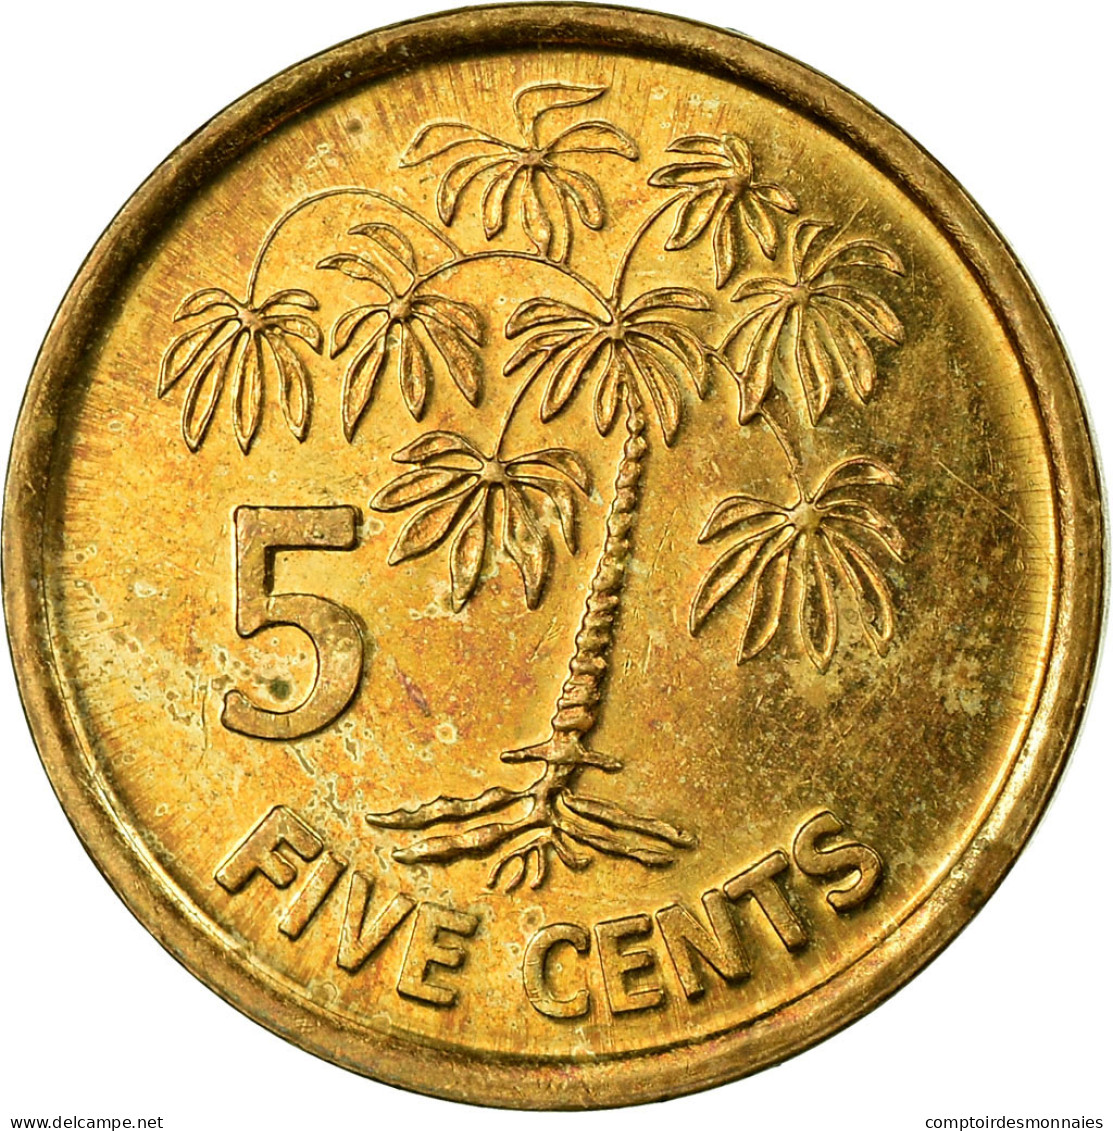 Monnaie, Seychelles, 5 Cents, 2012, British Royal Mint, TB+, Laiton - Seychelles